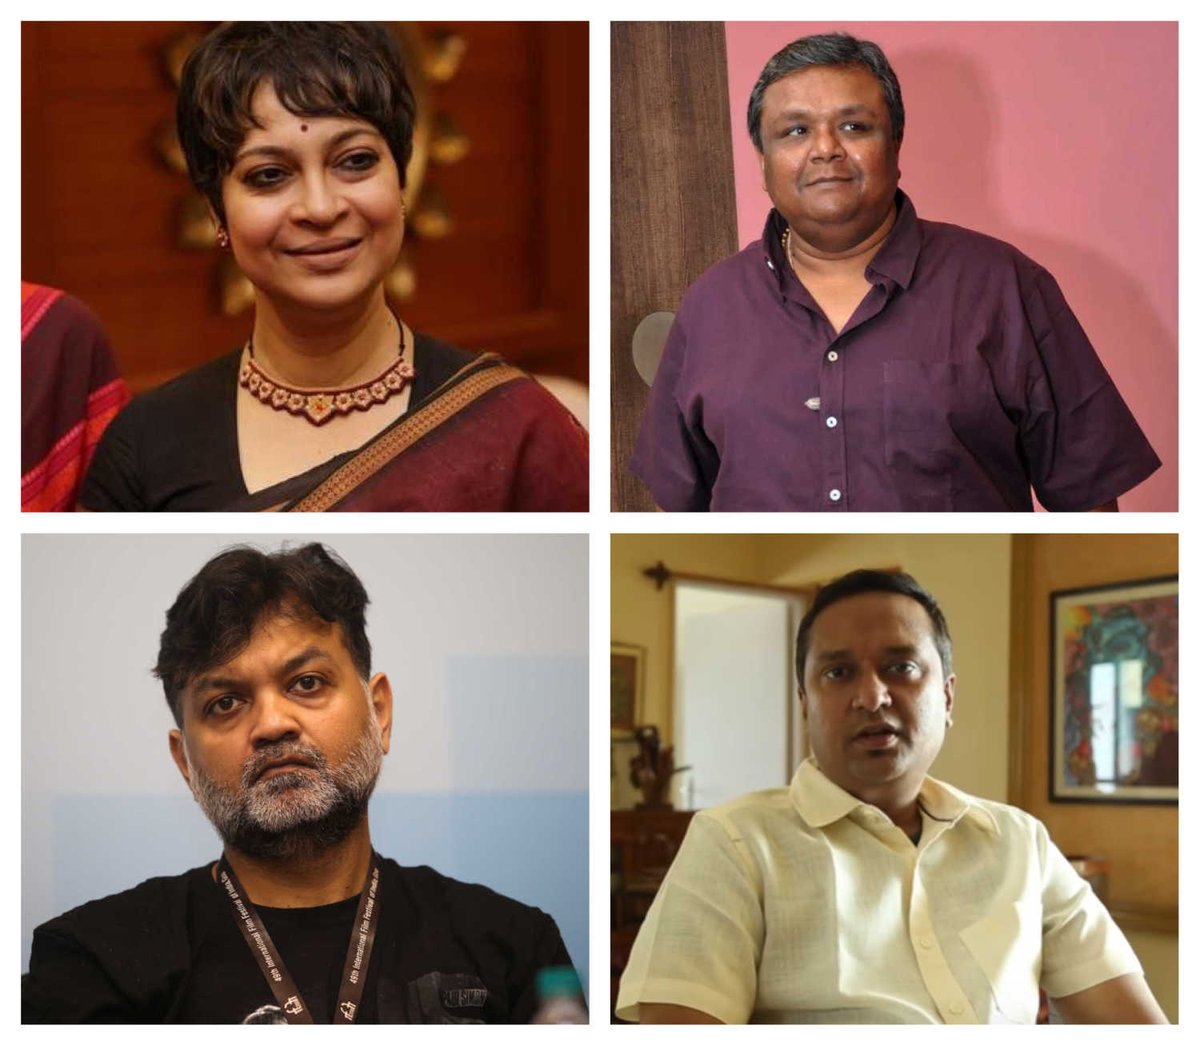 #SrijitMukherji, #ChurniGanguly, #IndraadipDasgupta and #SagnikChatterjee speak about their victories at the 66th National awards - bit.ly/2yTTfHN

@srijitspeaketh @utterlyChurni @iindraadip @sagnikc13